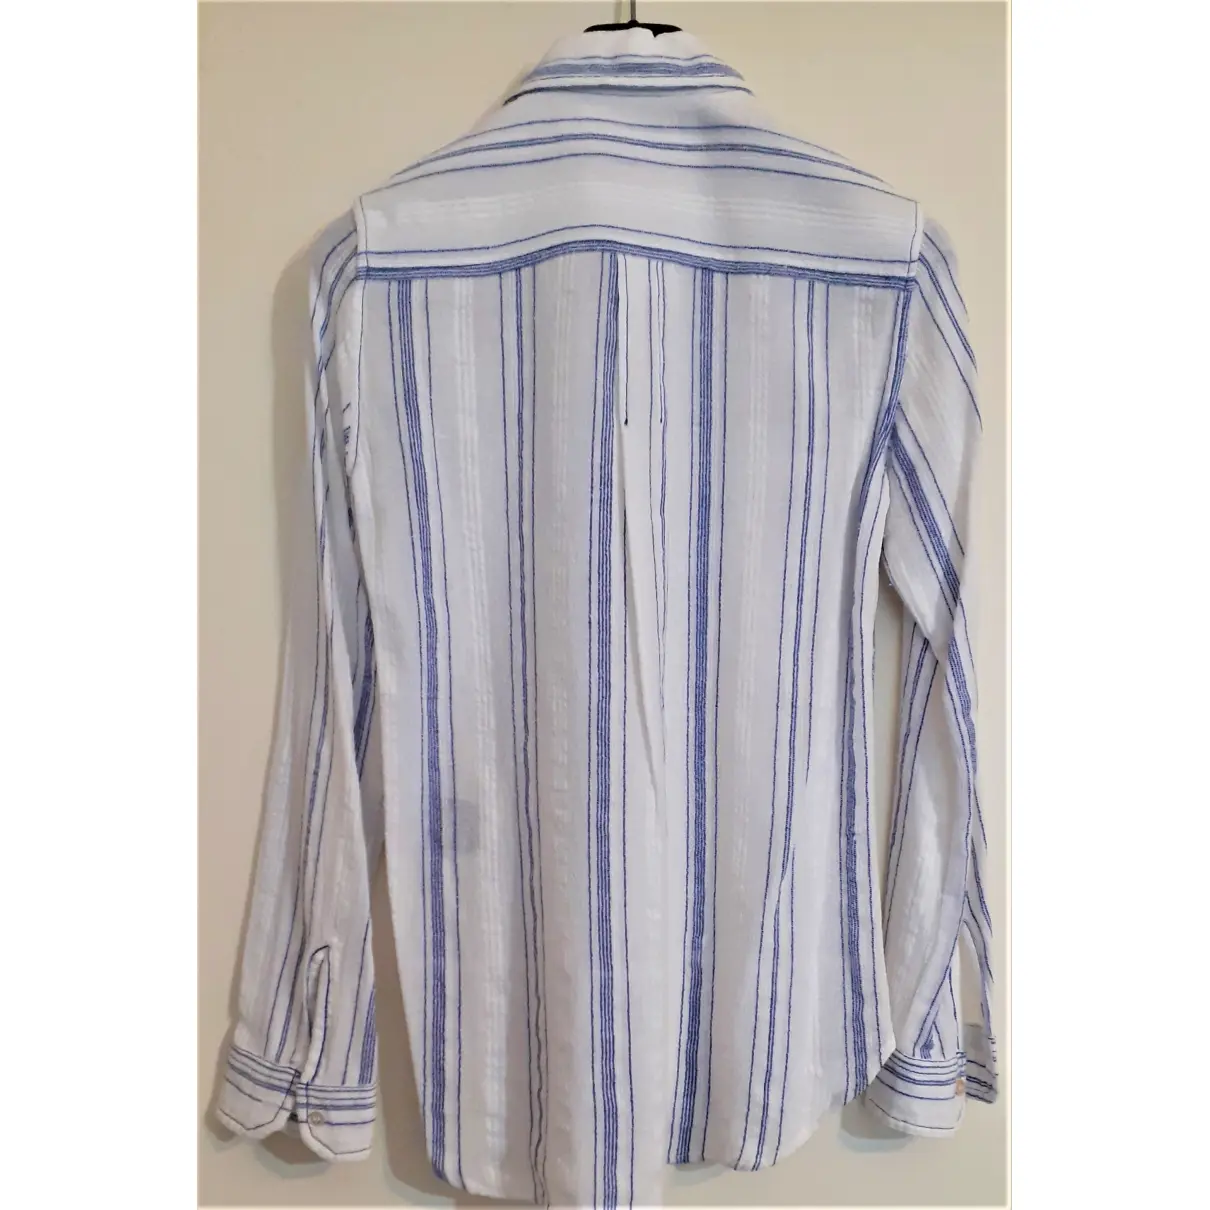 Buy Isabel Marant Etoile Shirt online - Vintage